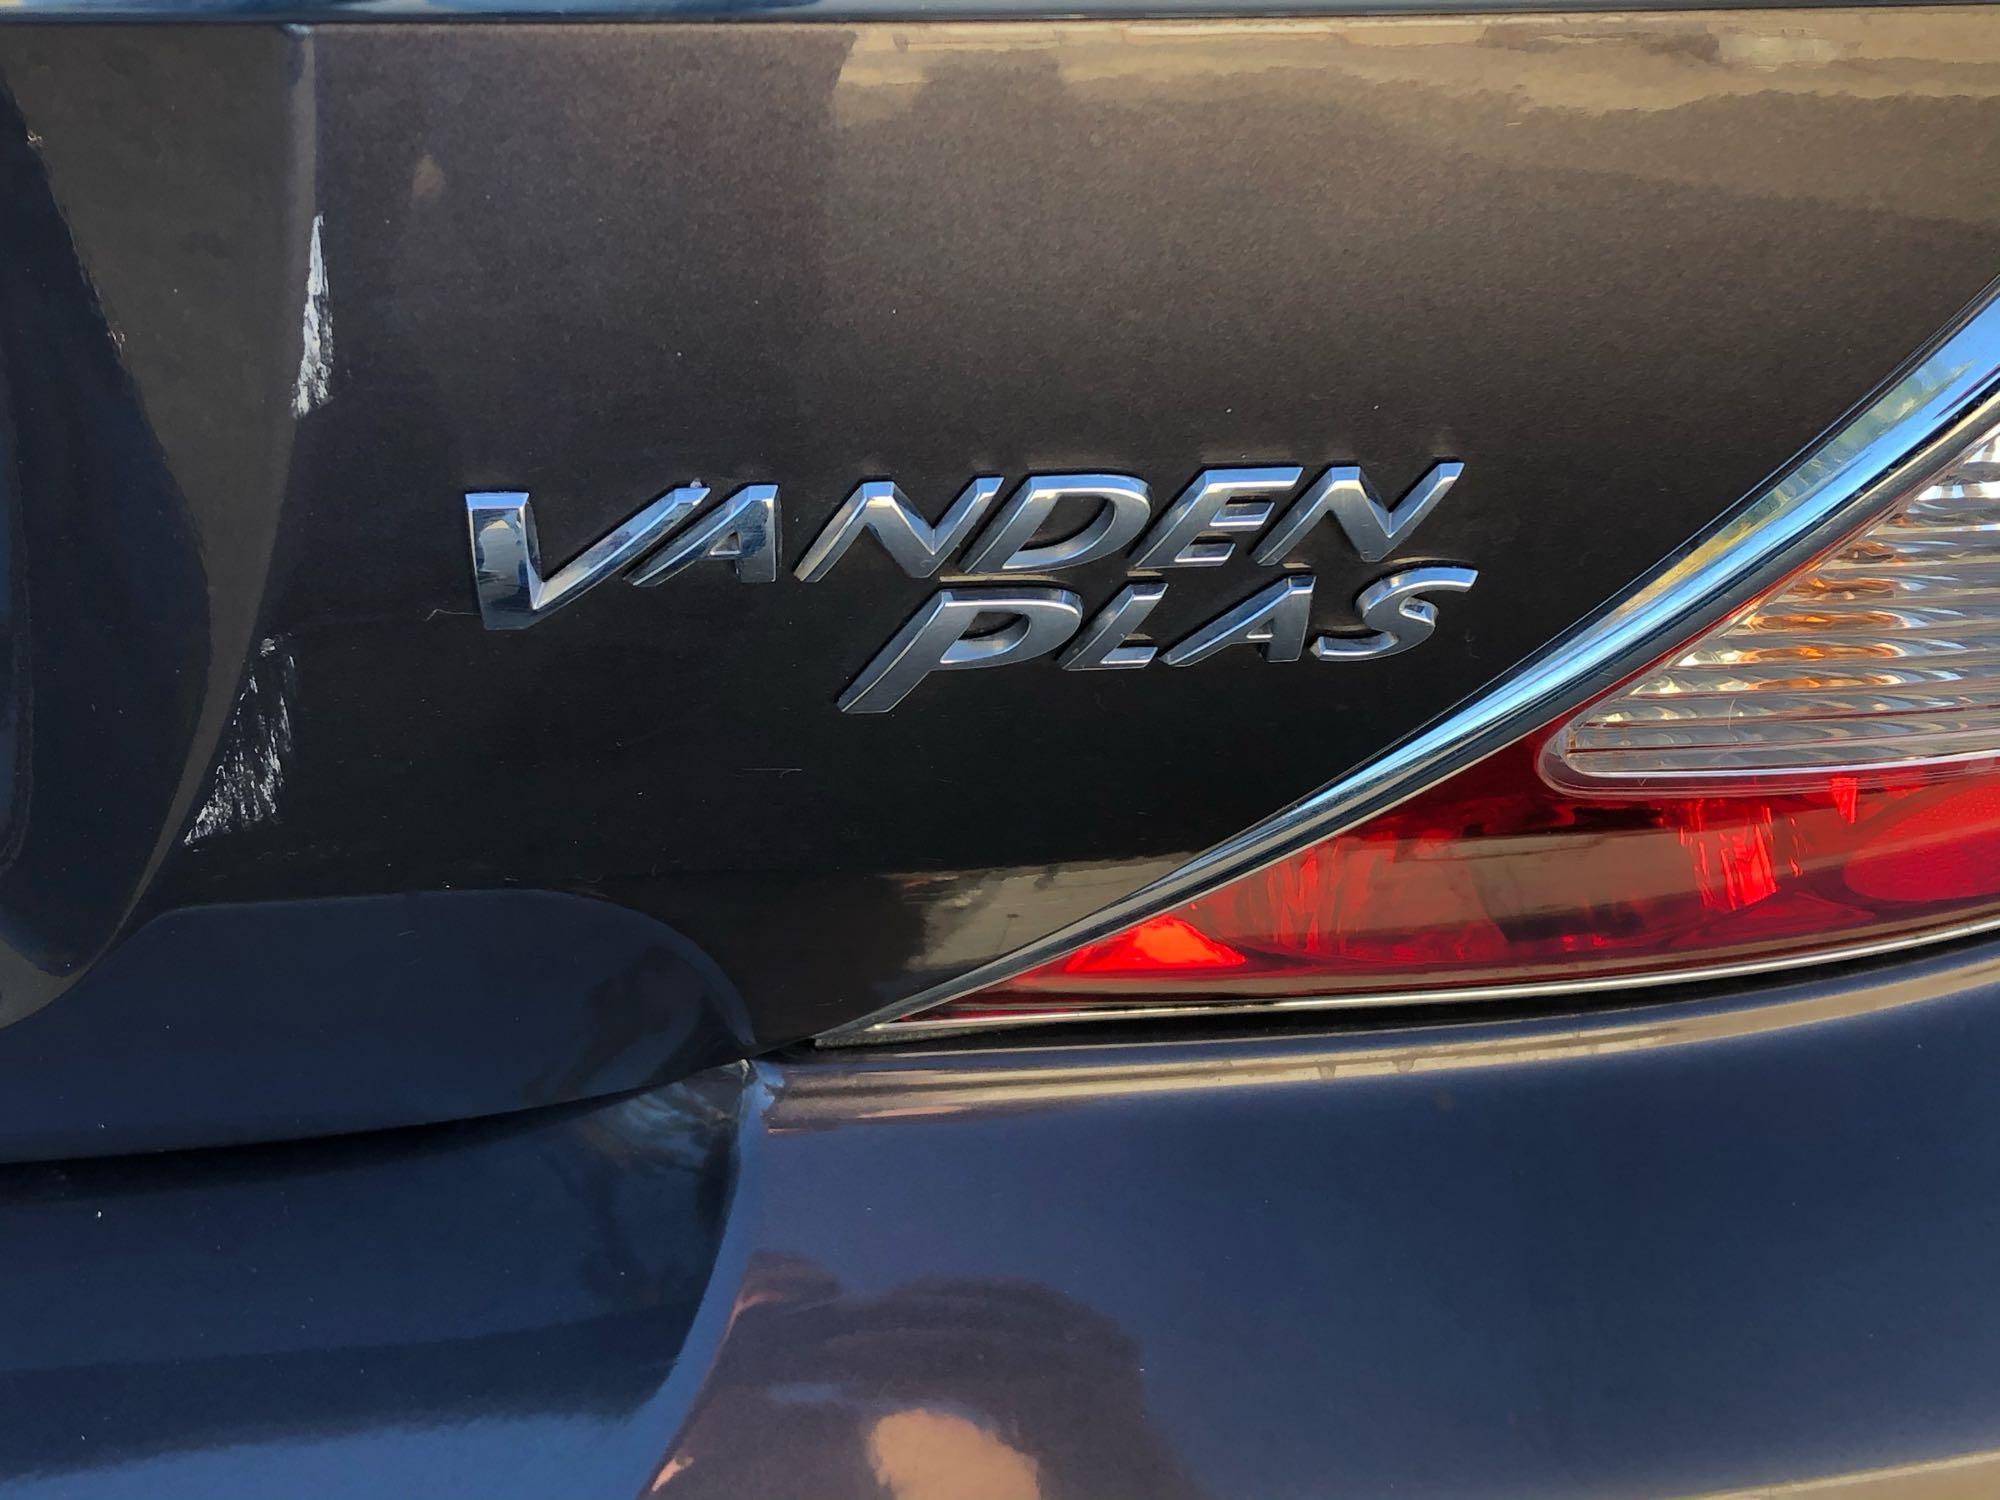 2008 Jaguar XJ Vanden Plas 66500 Miles. Smoker Owned. Some cosmetic scraps scratches Tag 6PTZ940